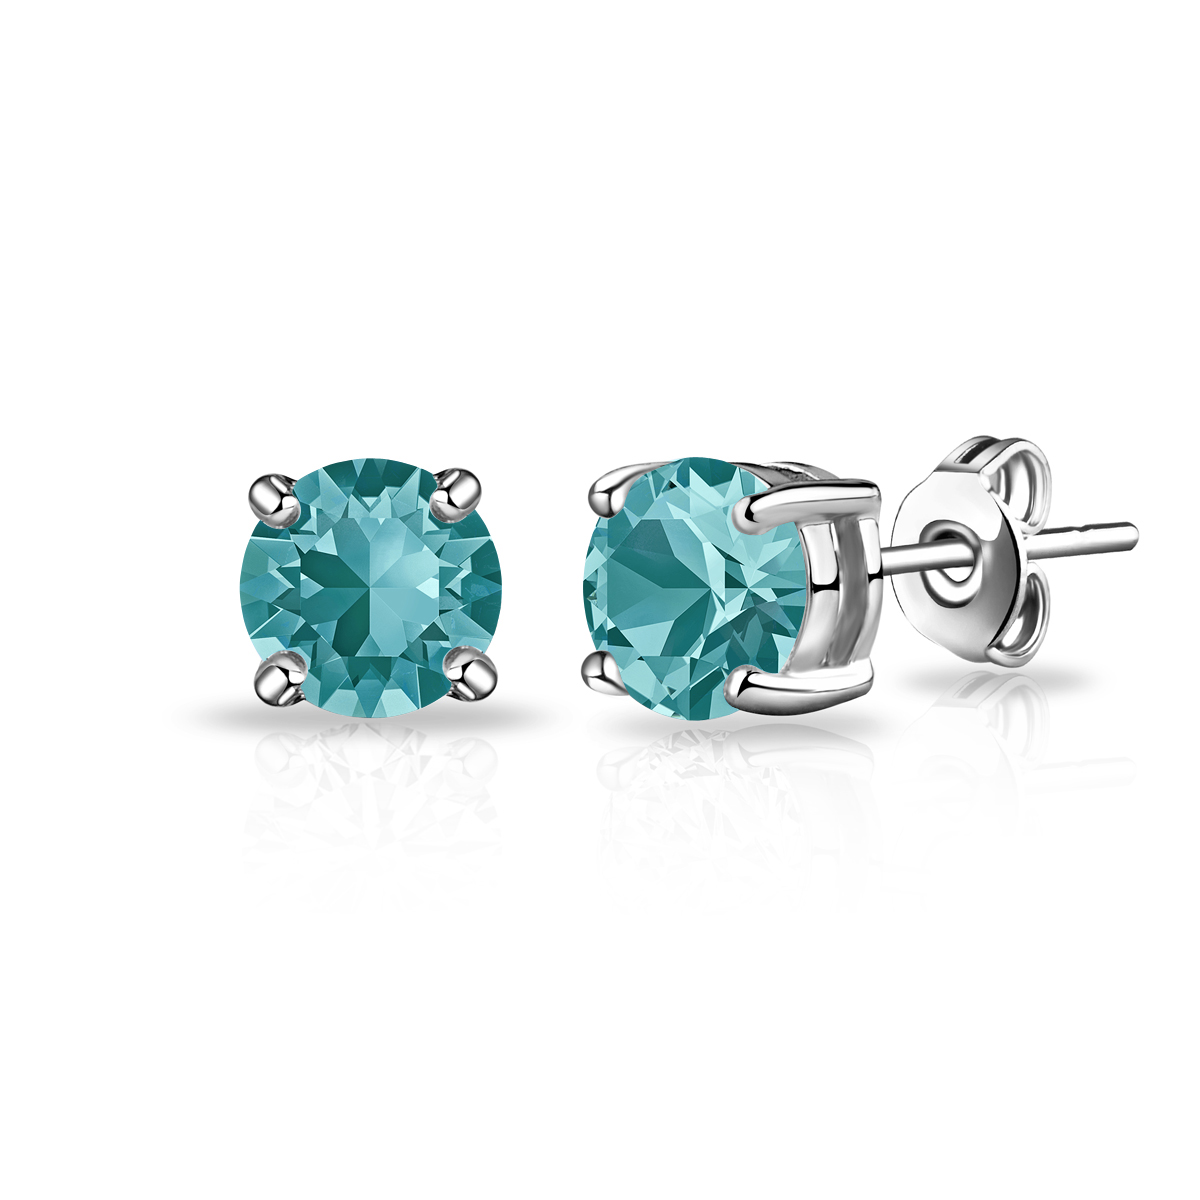 Blue Stud Earrings Created with Zircondia® Crystals by Philip Jones Jewellery